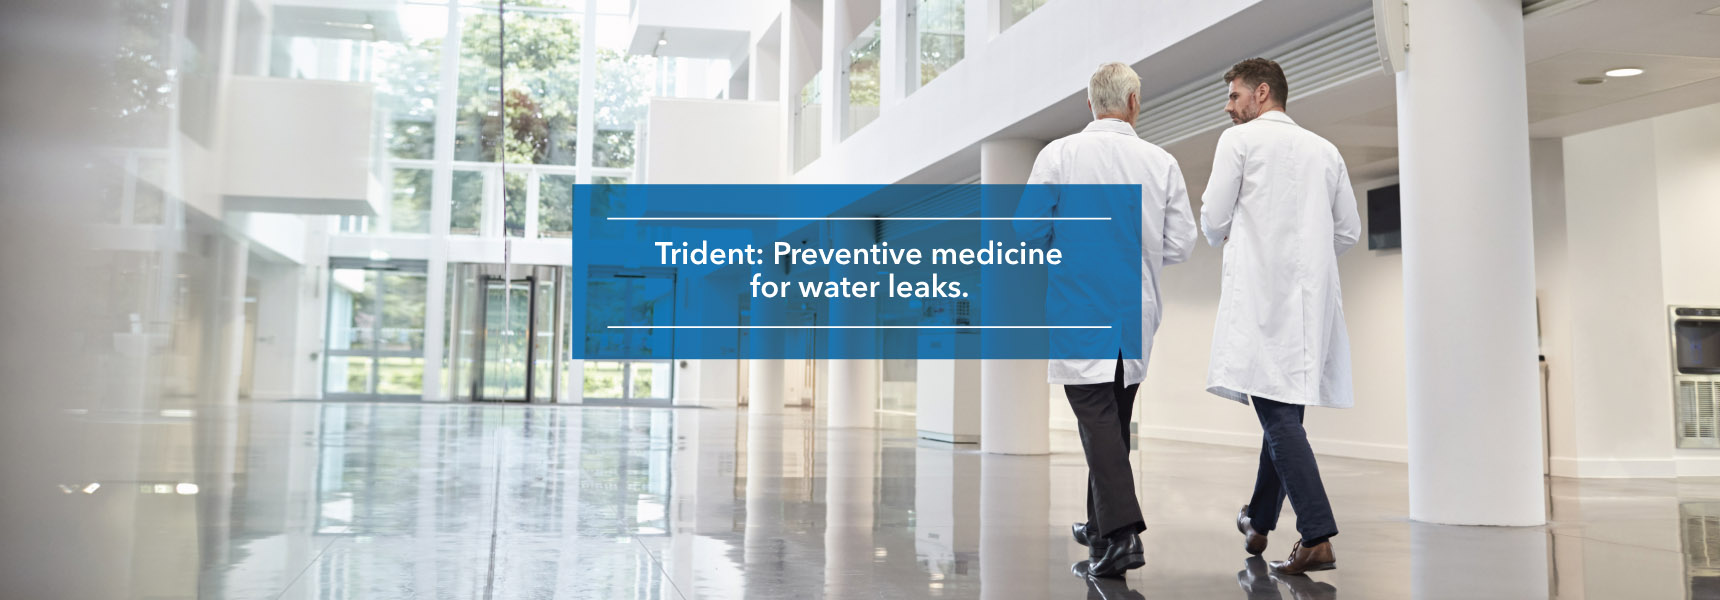 Trident. Preventive medicine for water leaks.